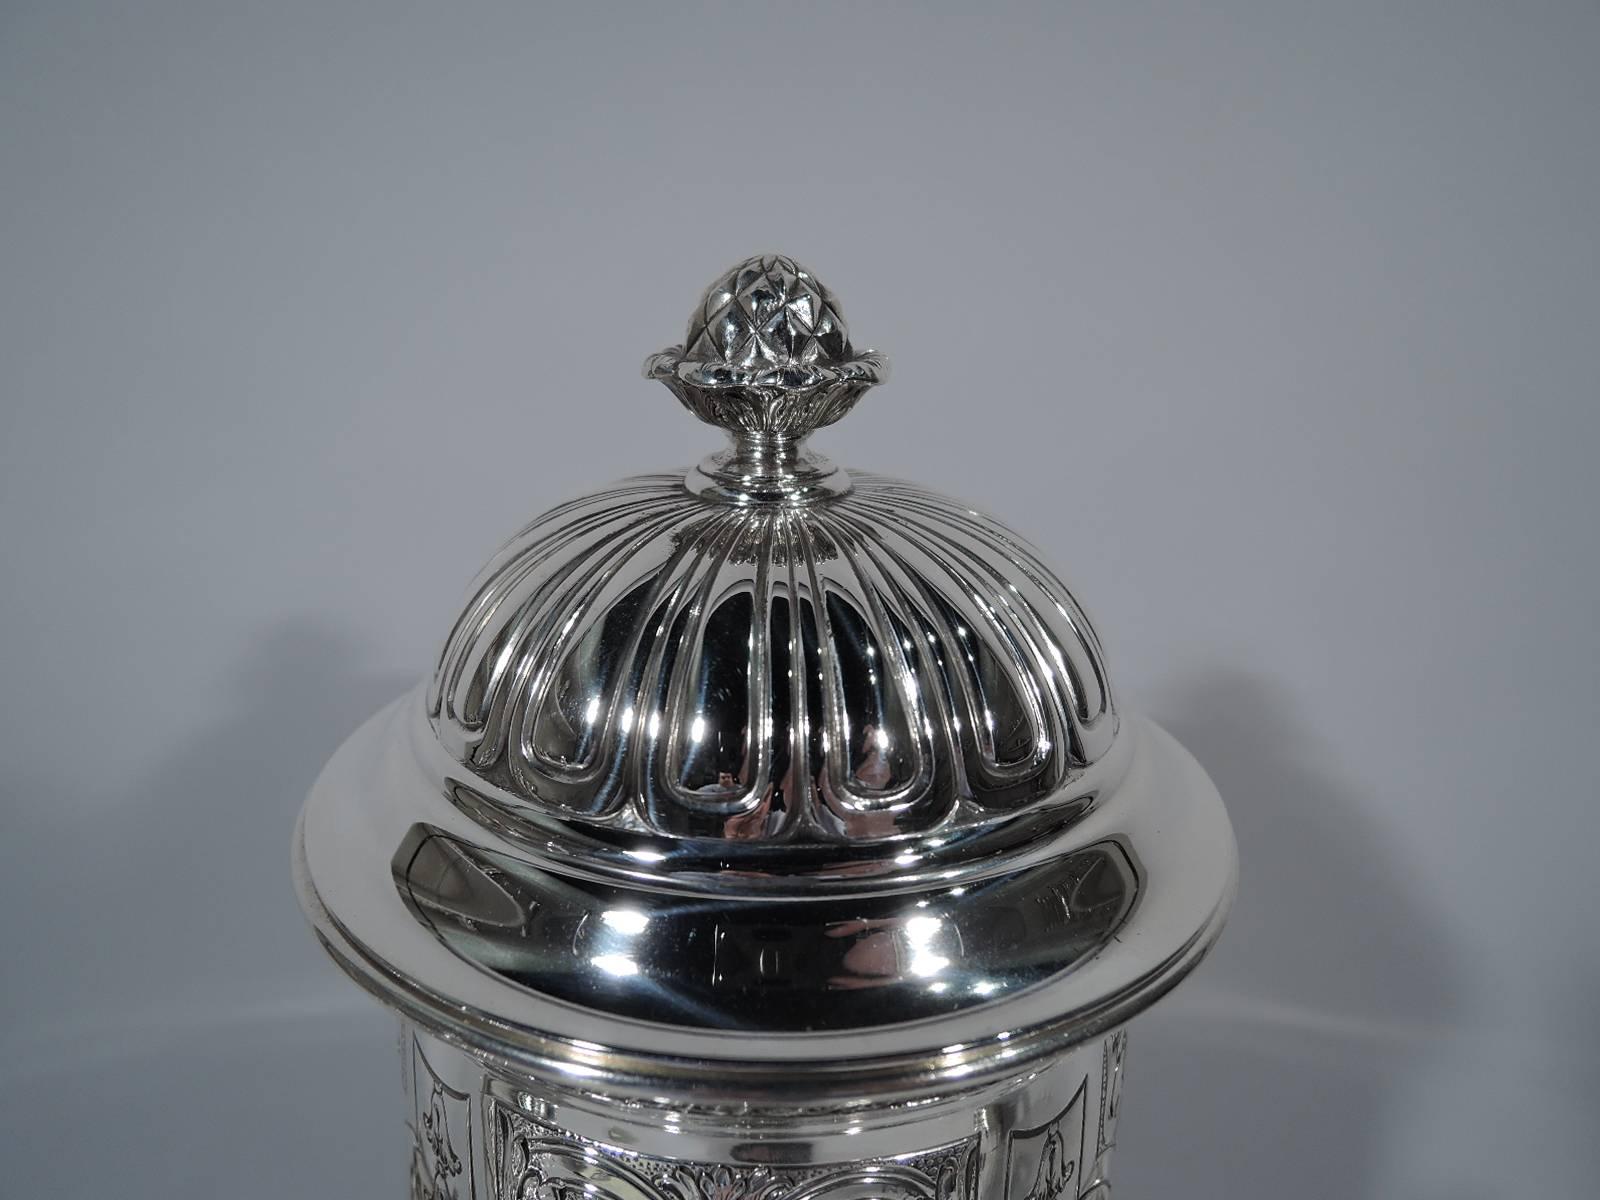 American Antique Gorham Sterling Silver Tea Set with Jade-Mounted Urn